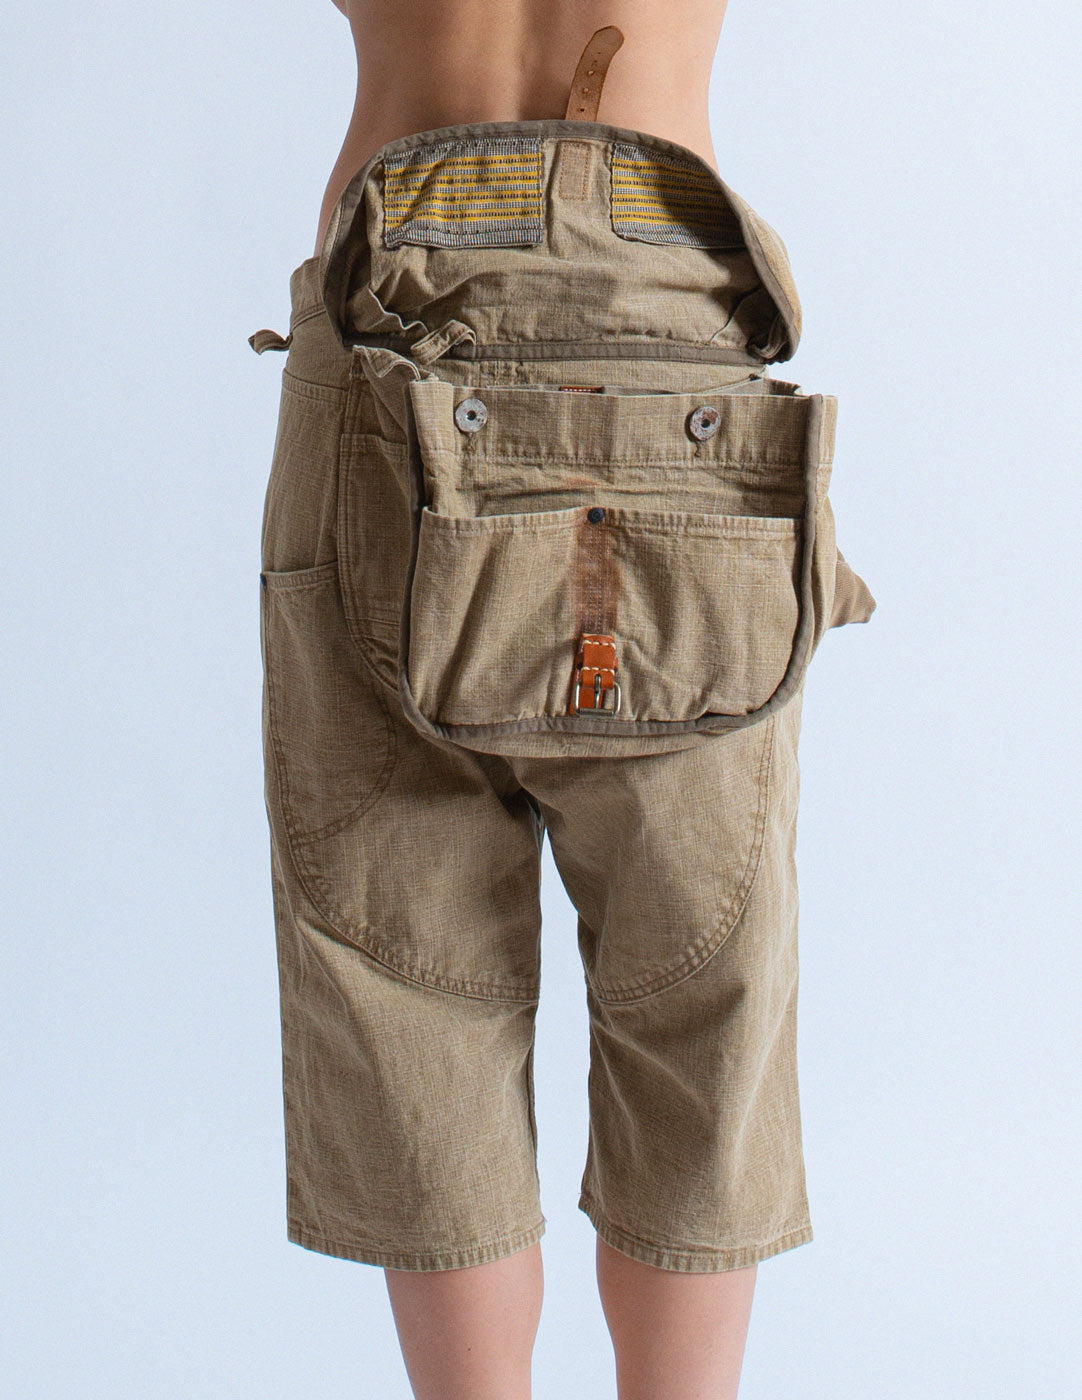 Kapital cargo shorts with hip bag detail